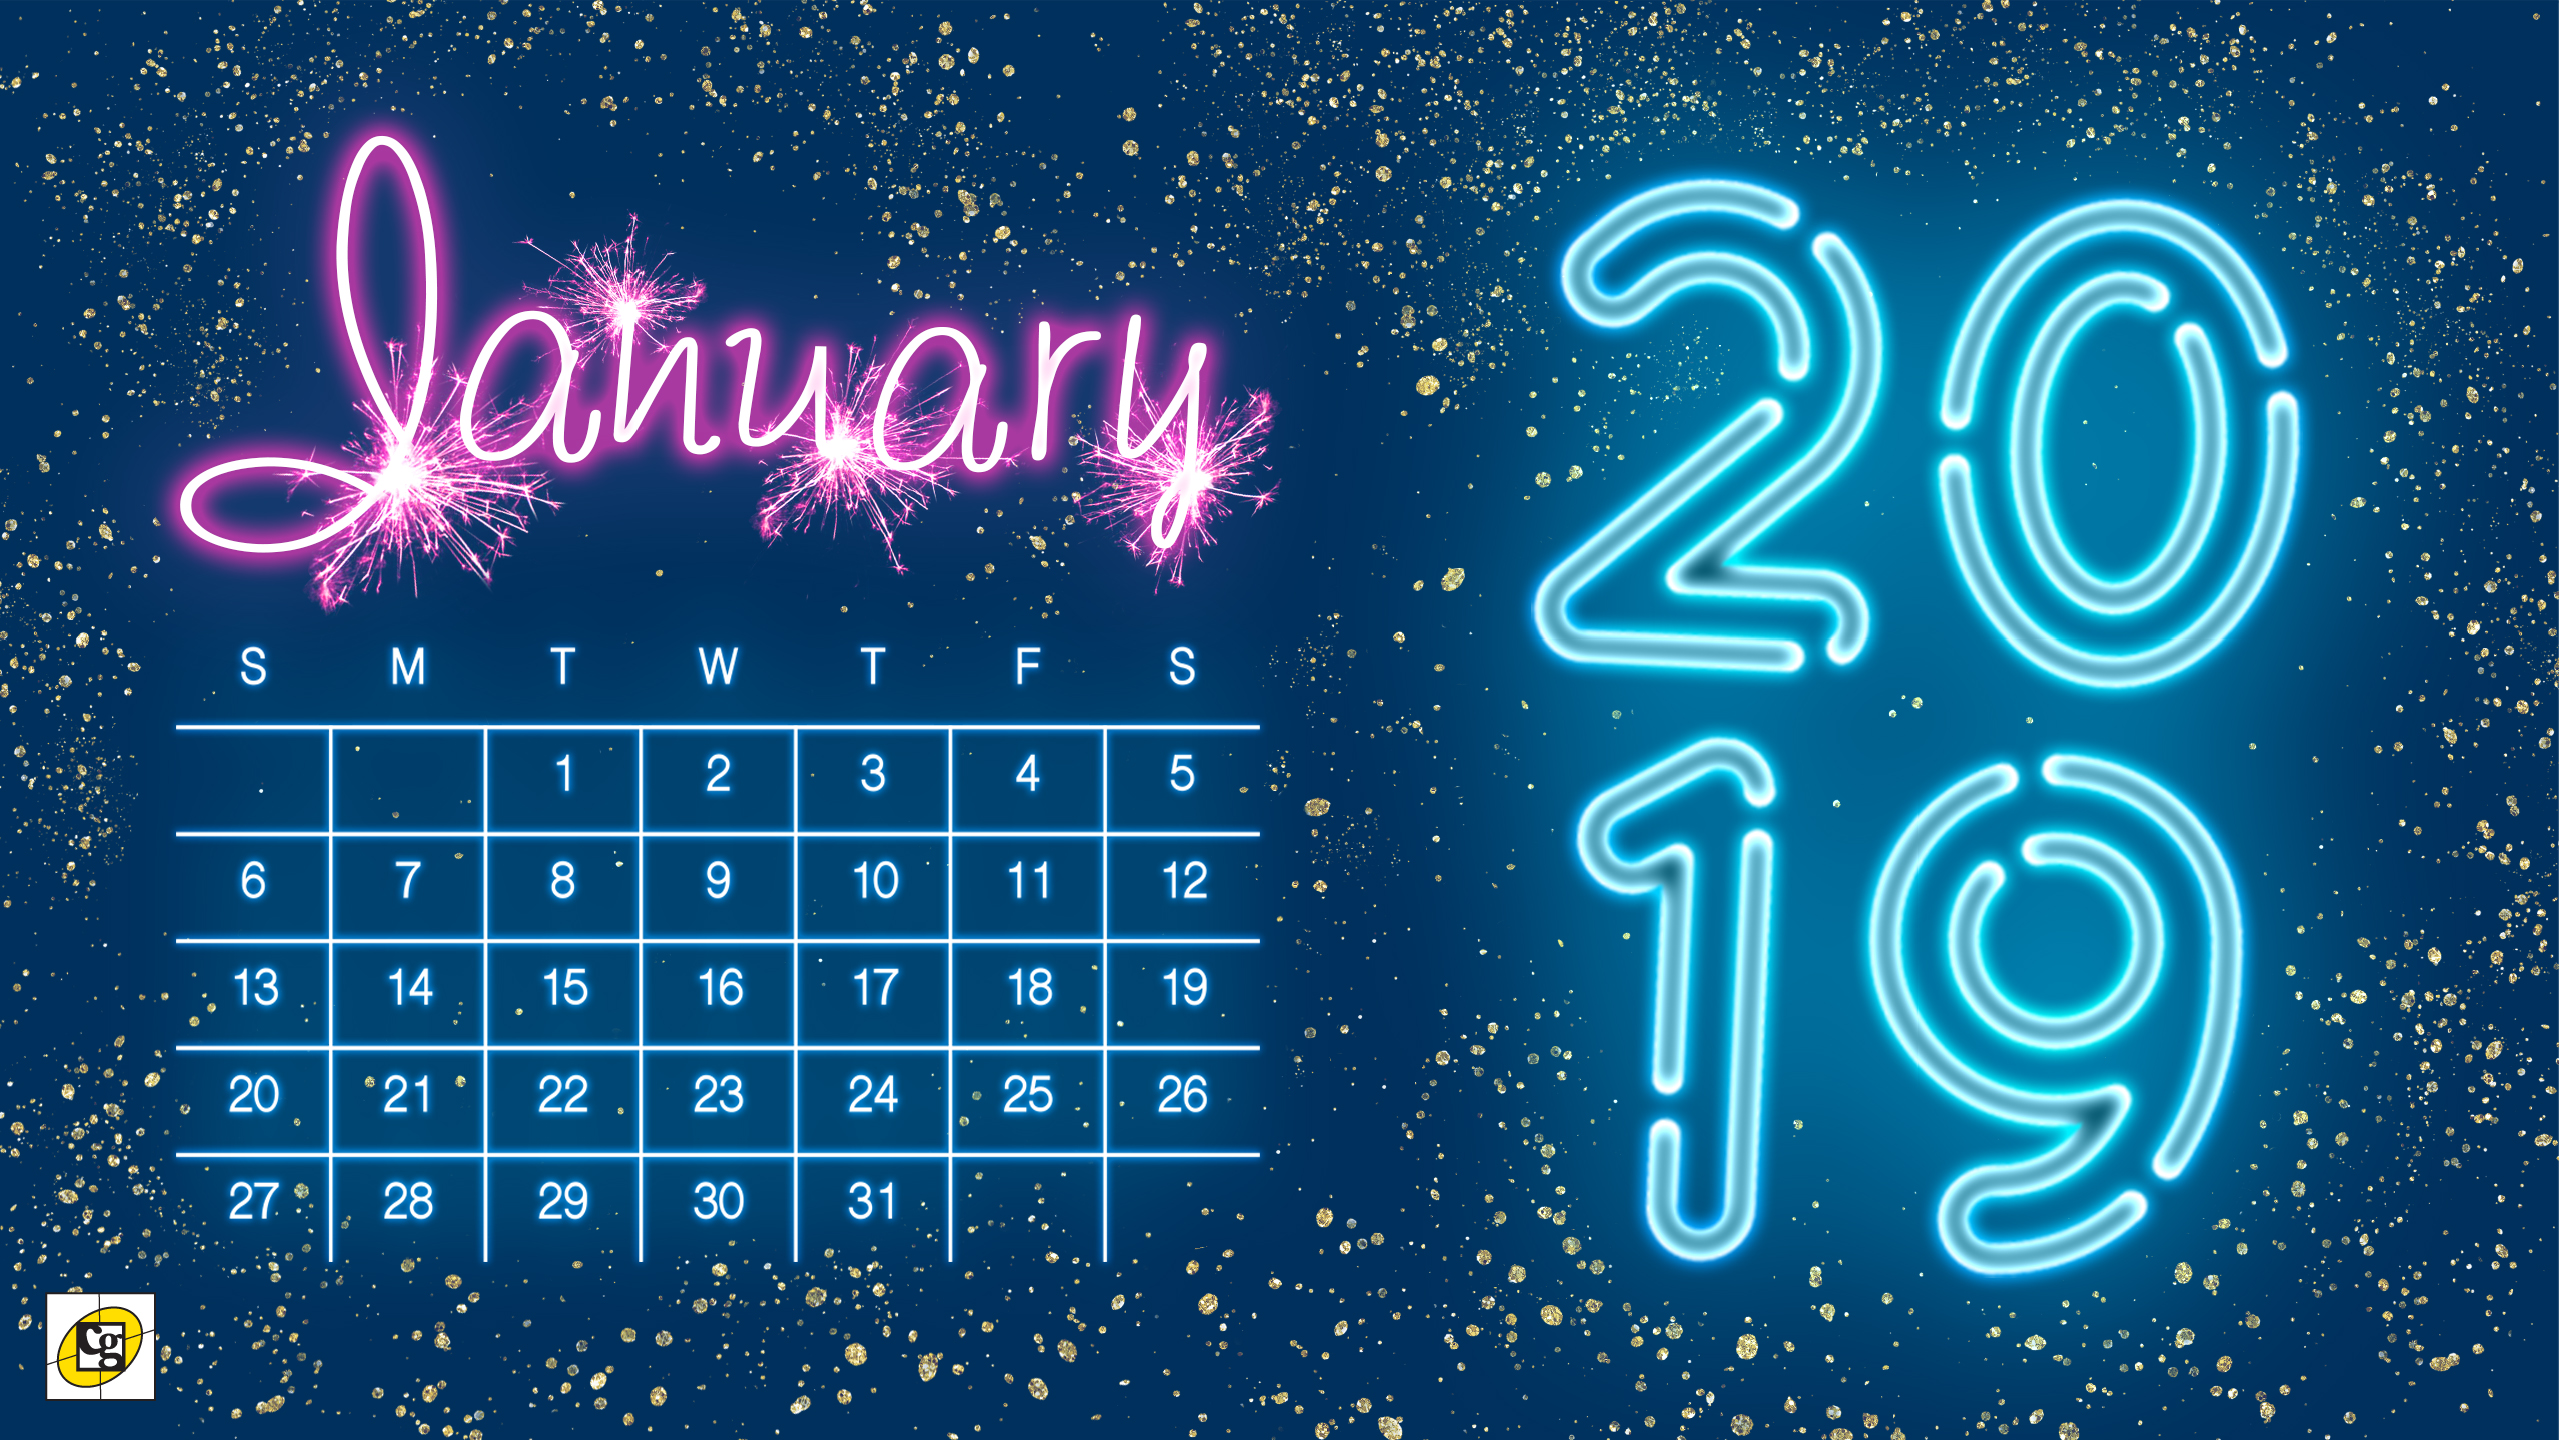 Free Download January 2019 Desktop Calendar Composure Graphics 